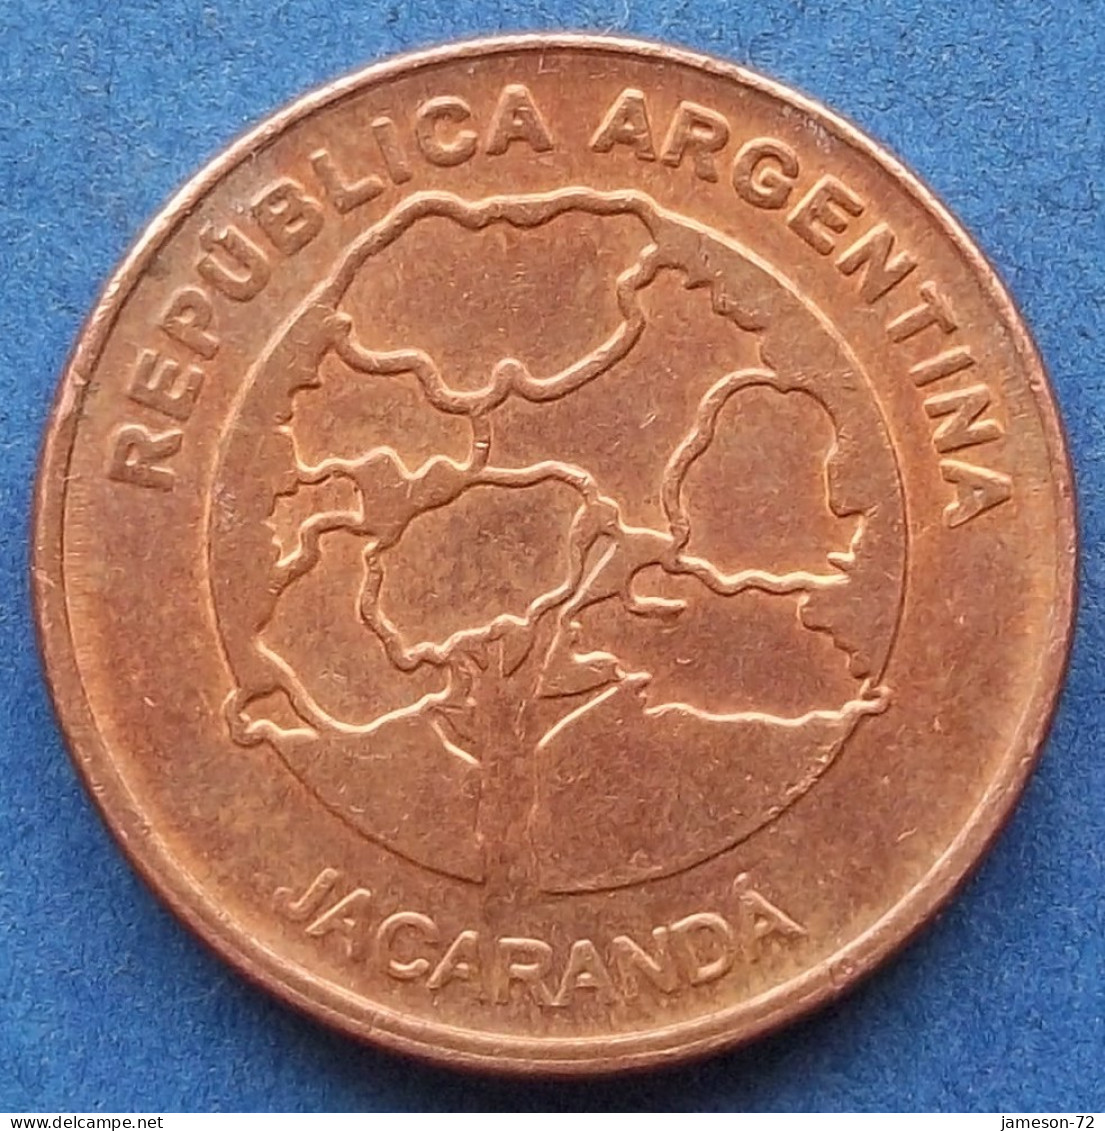 ARGENTINA - 1 Peso 2018 "Jacaranda" KM# 186 Monetary Reform (1992) - Edelweiss Coins - Argentina